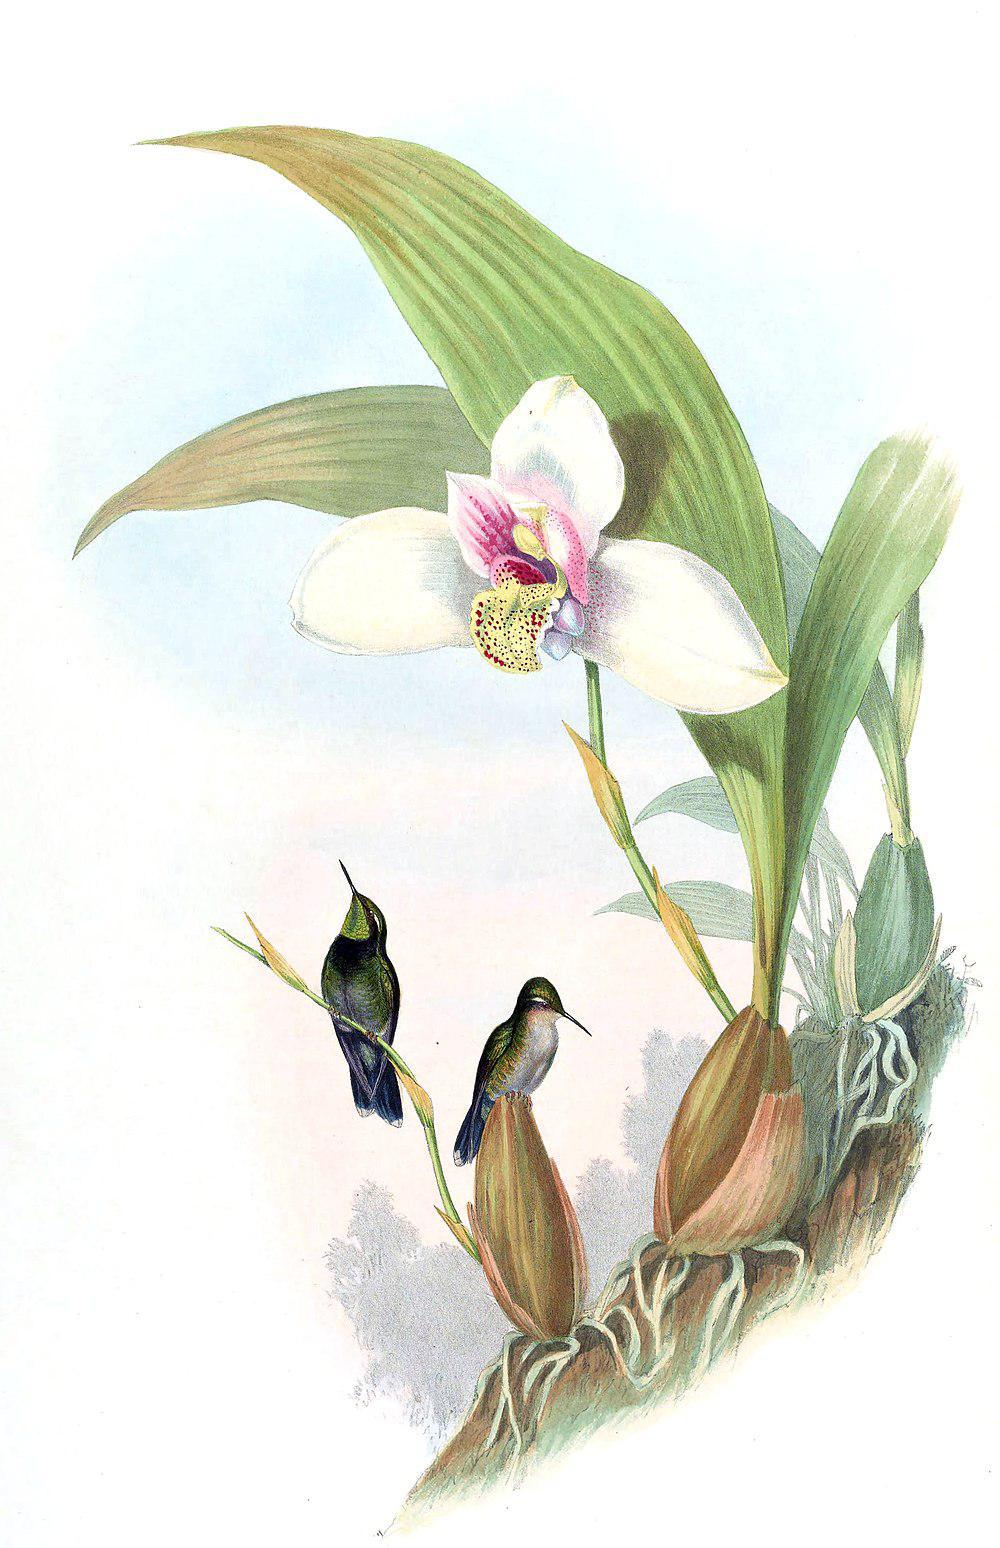 翠颏蜂鸟 / Emerald-chinned Hummingbird / Abeillia abeillei